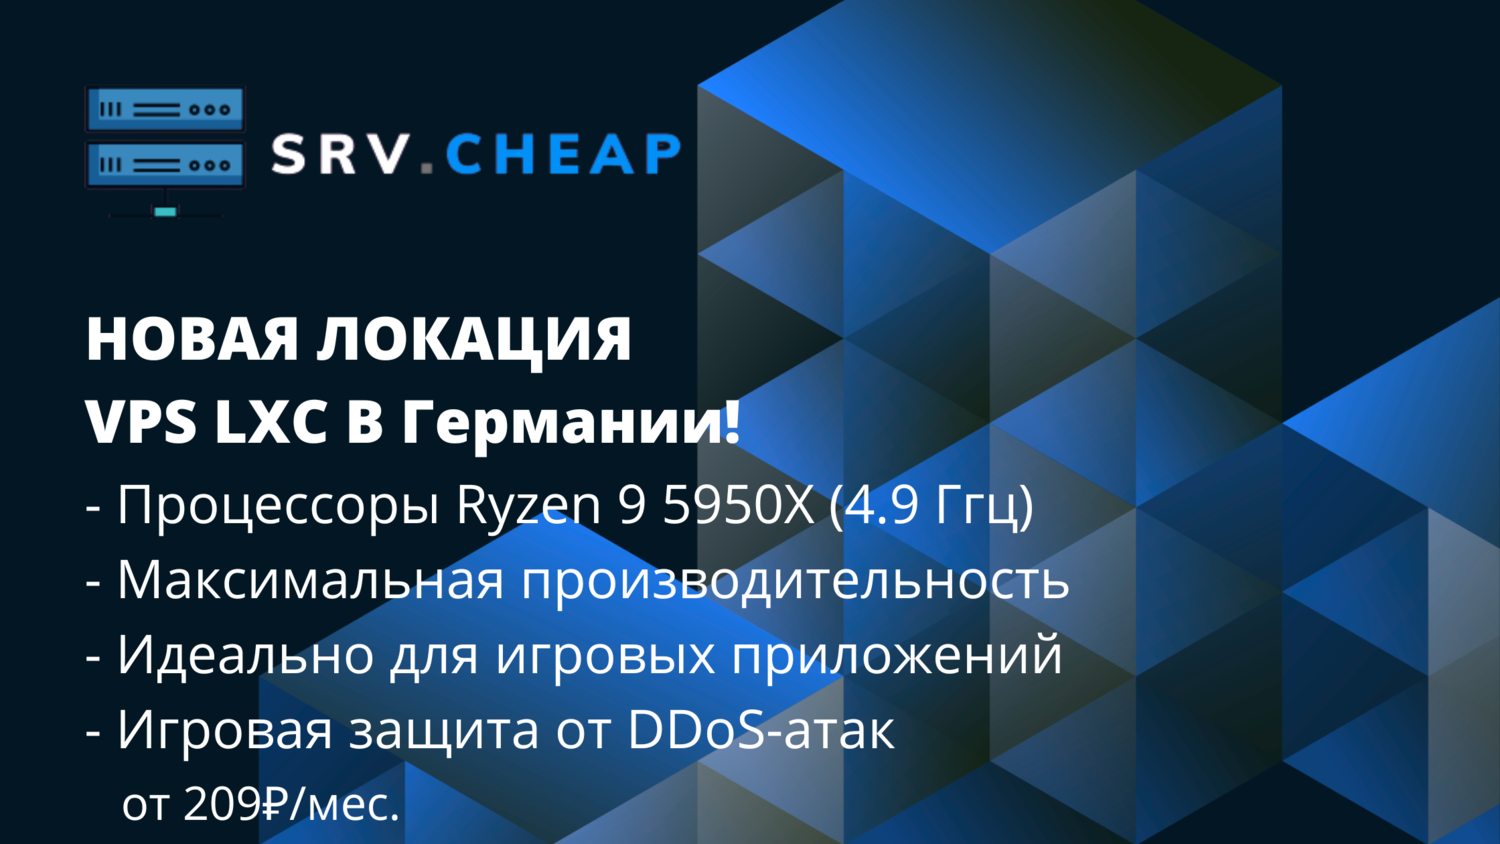 srv.cheap Ryzen 9 5950X LXC DE